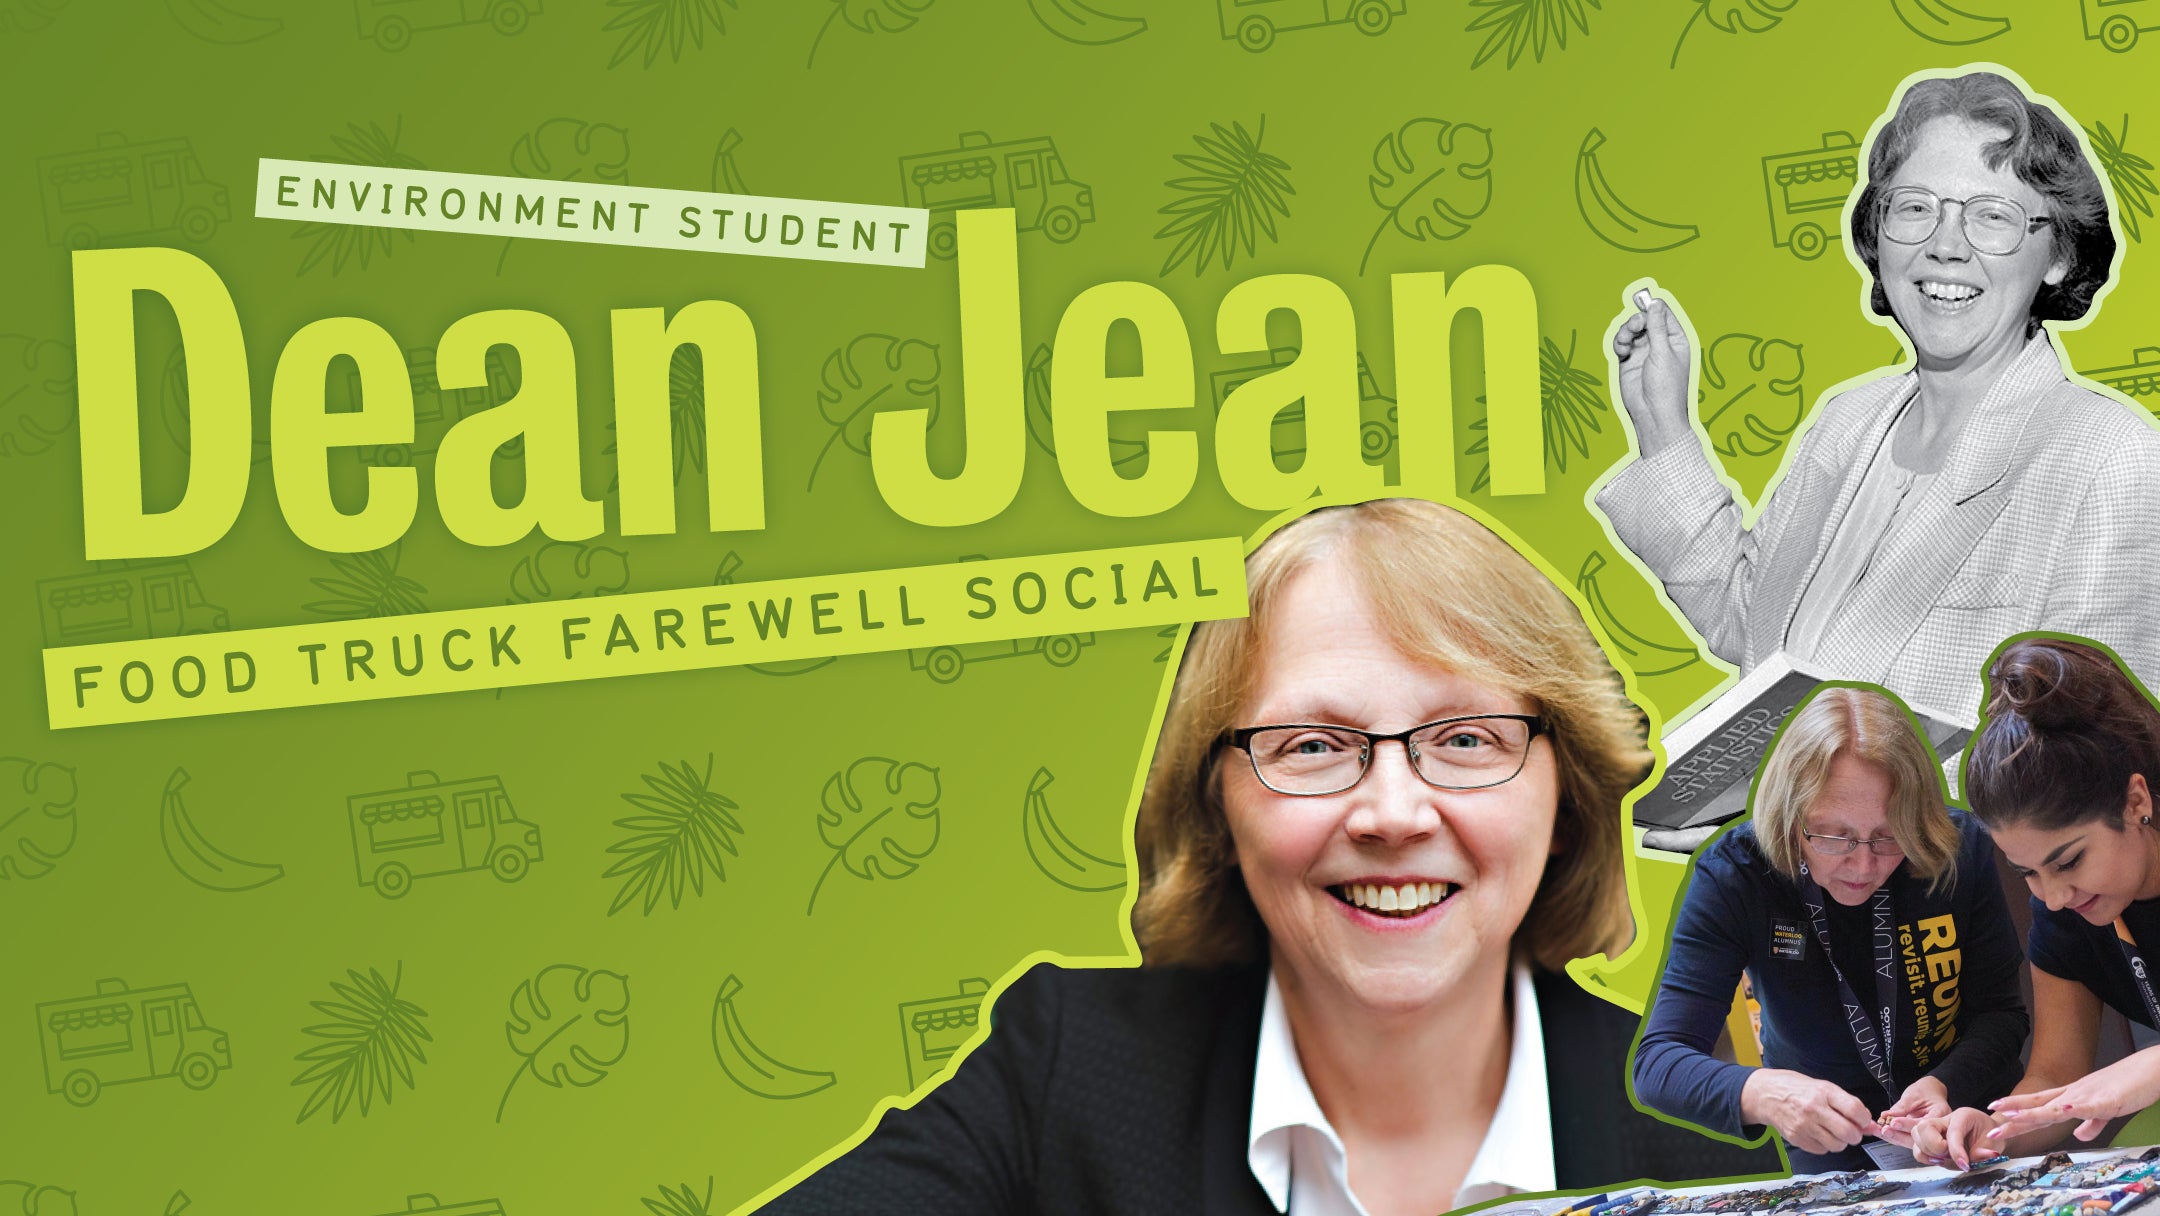 Dean Jean food truck farewell social event banner